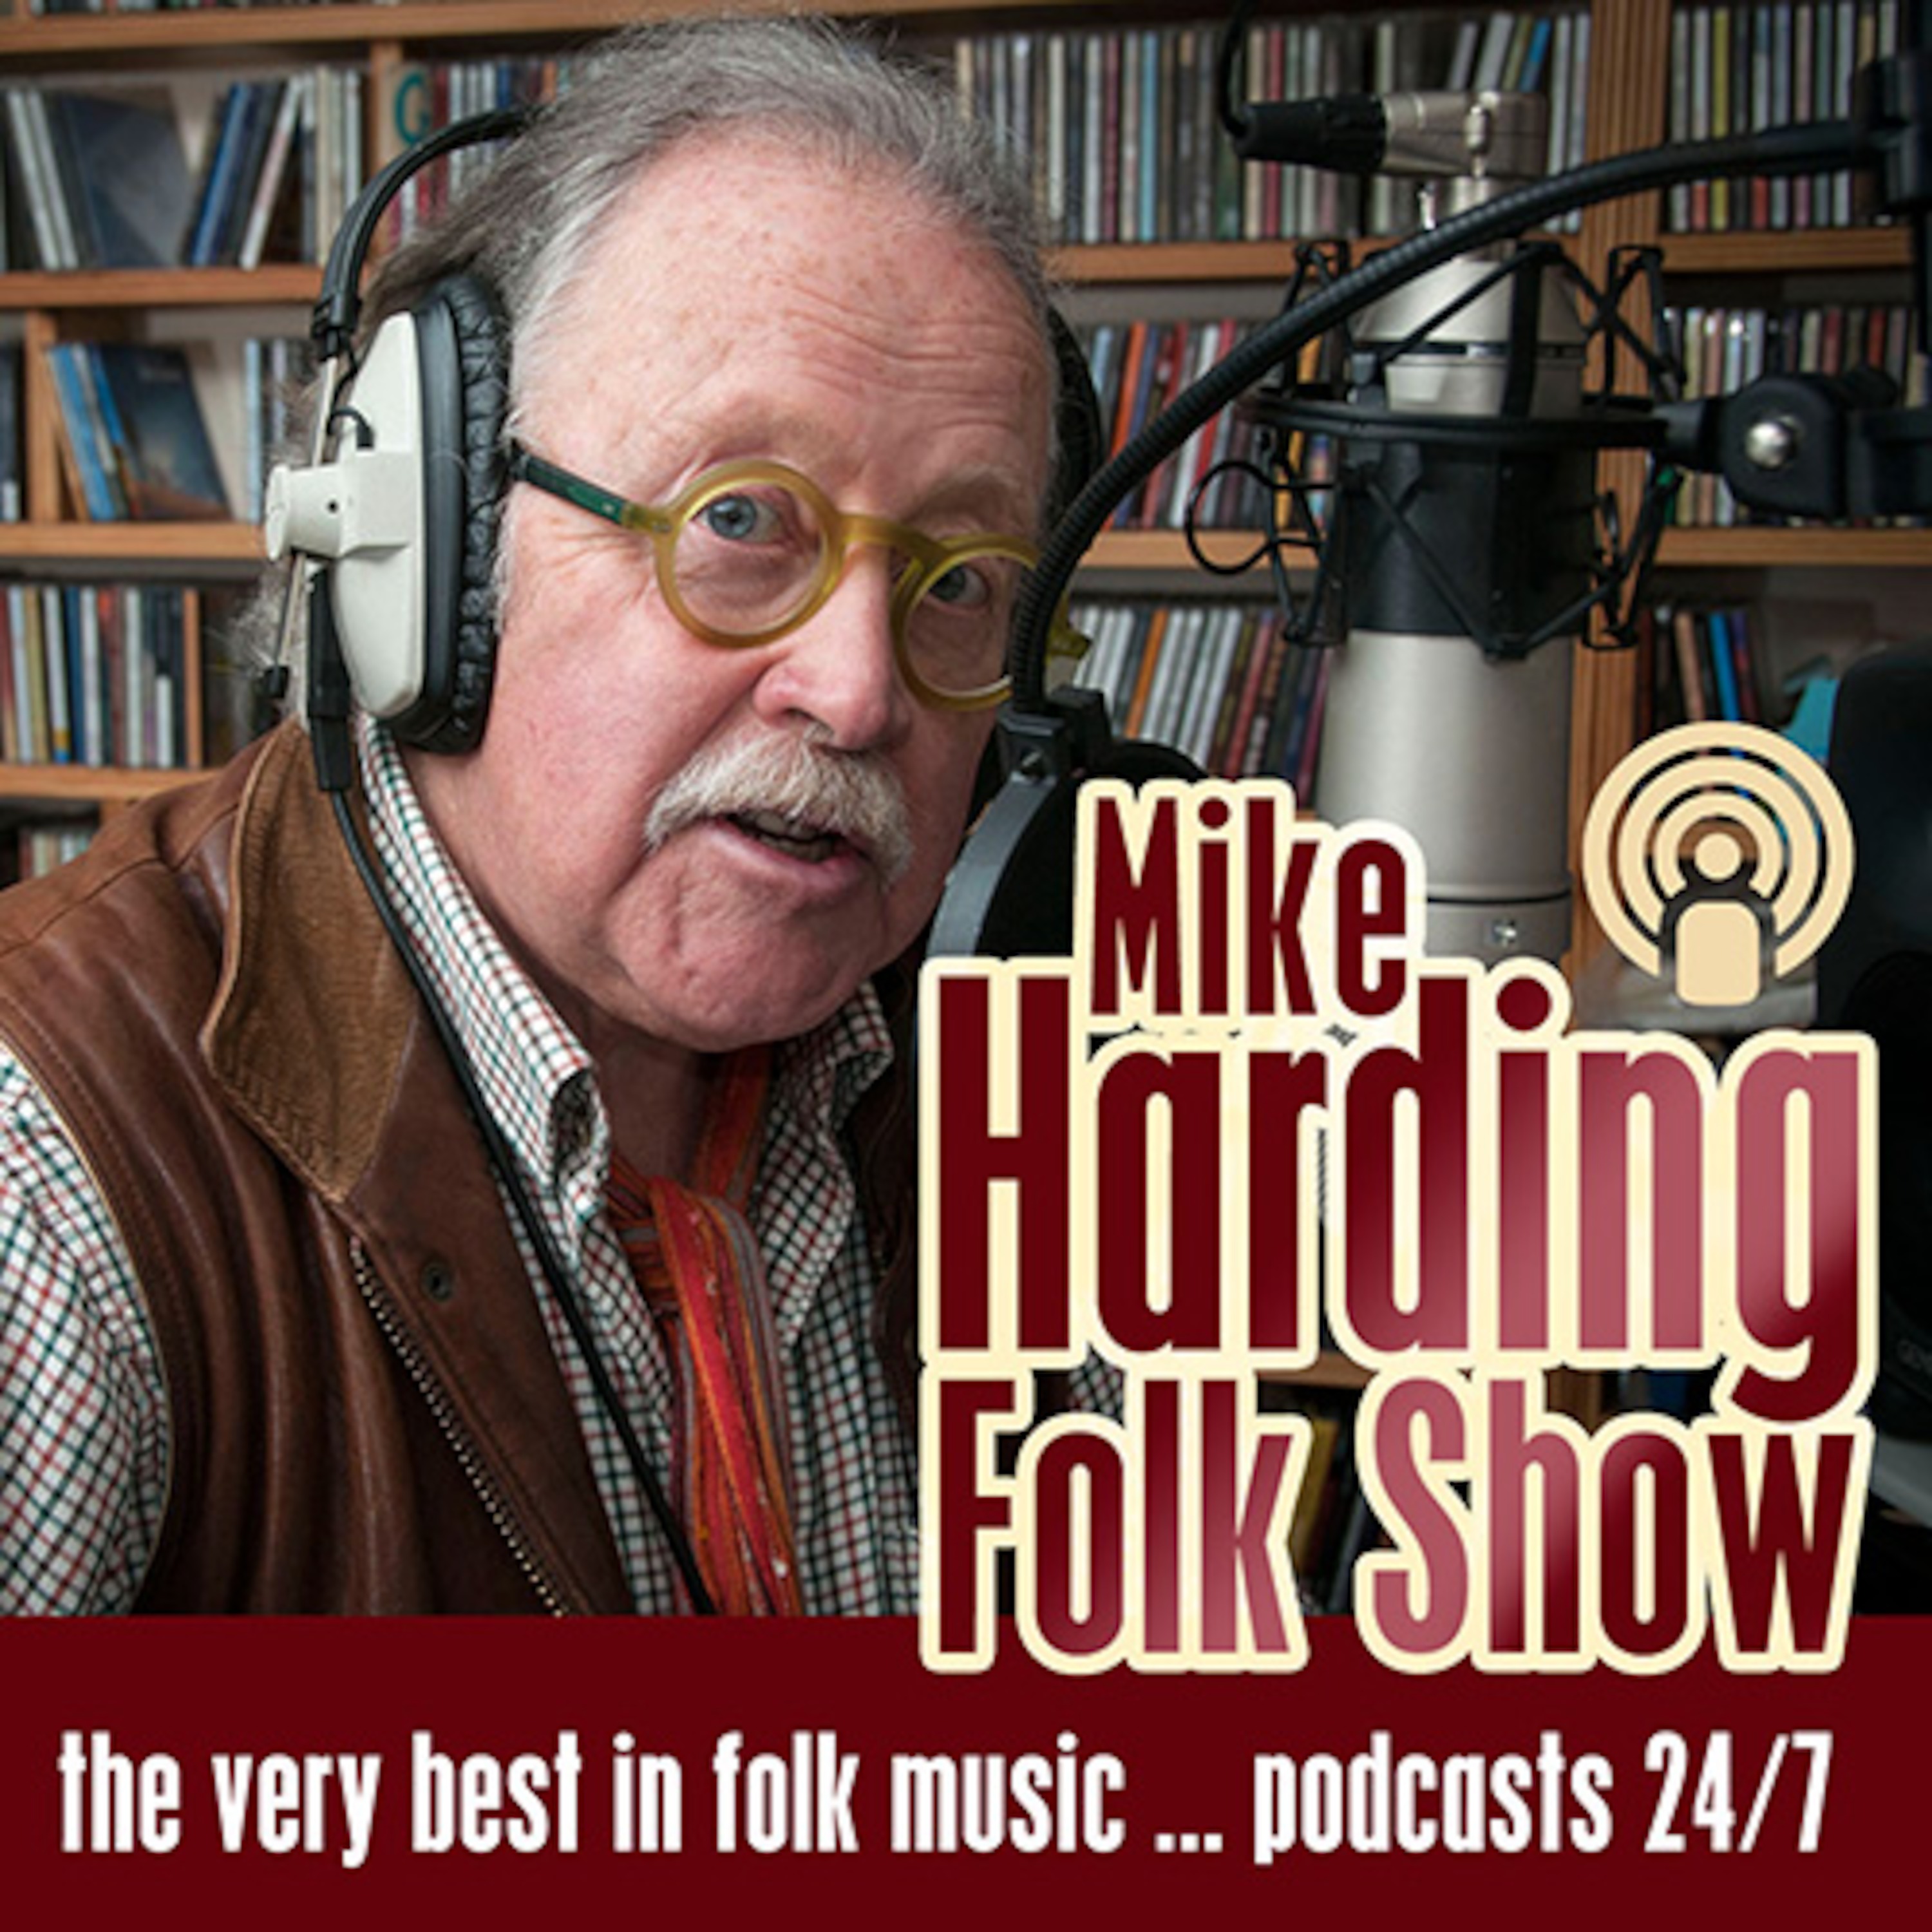 Mike Harding Folk Show 139